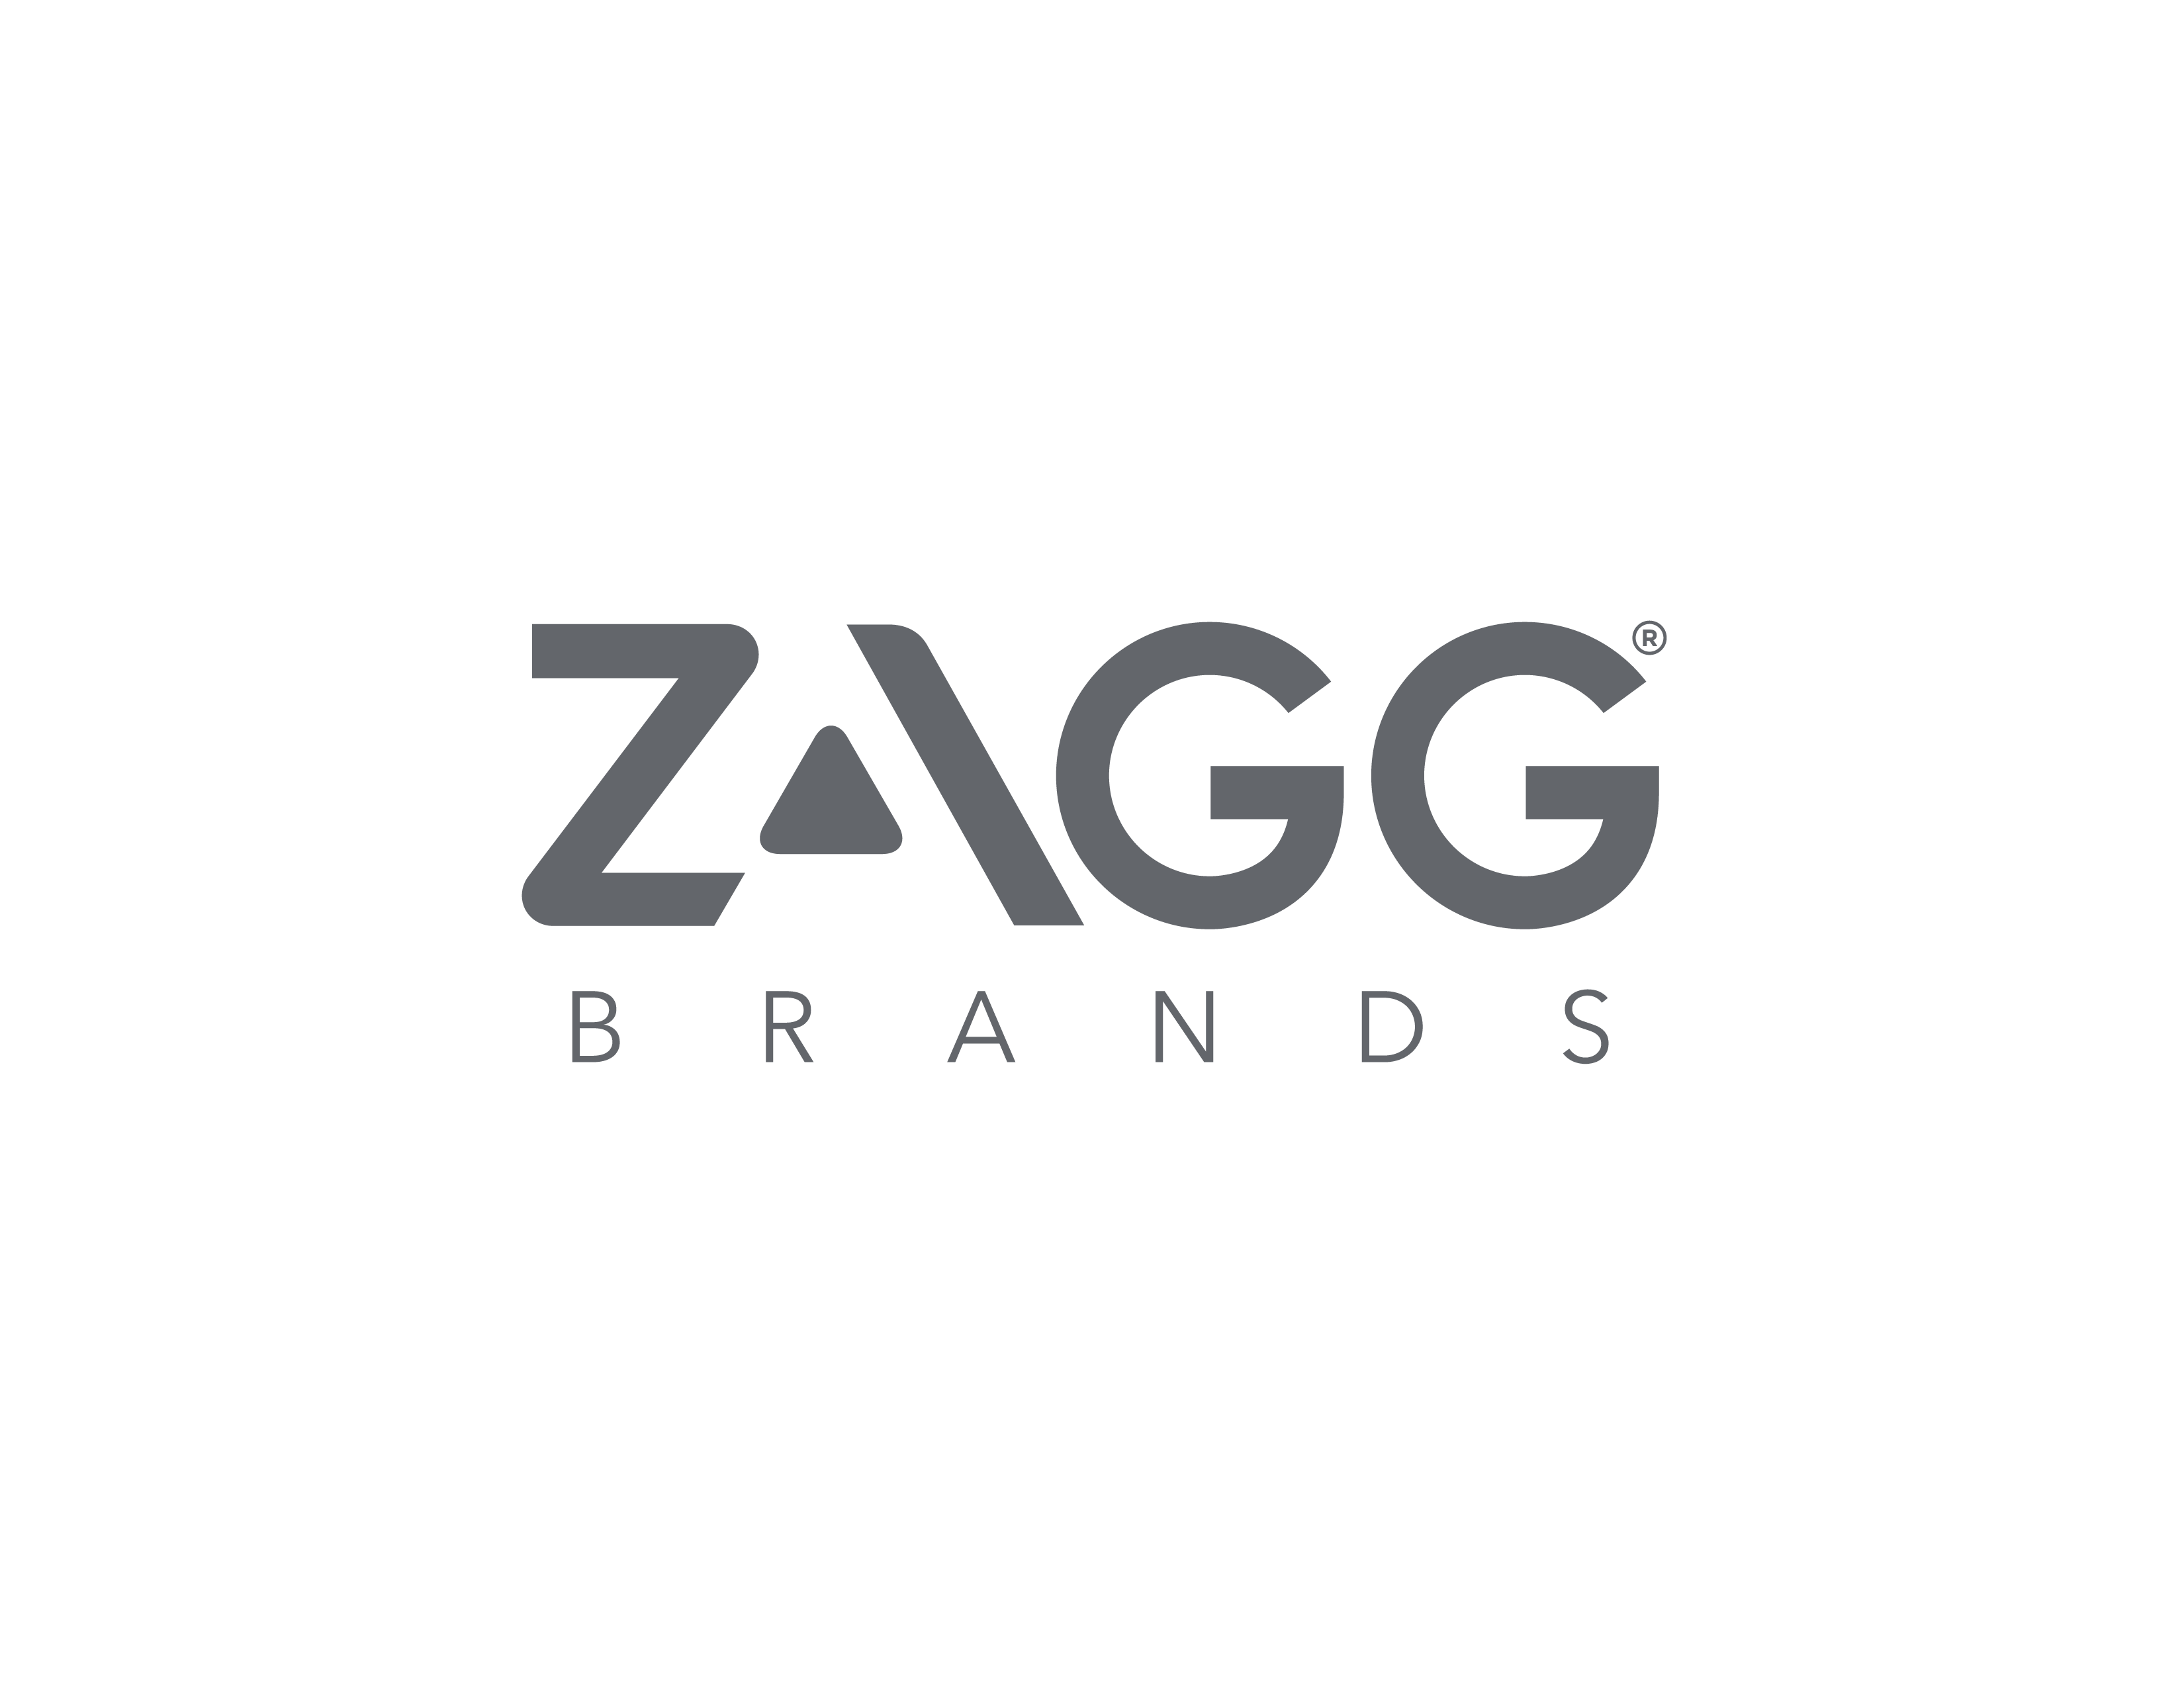 ZAGG Brands logo